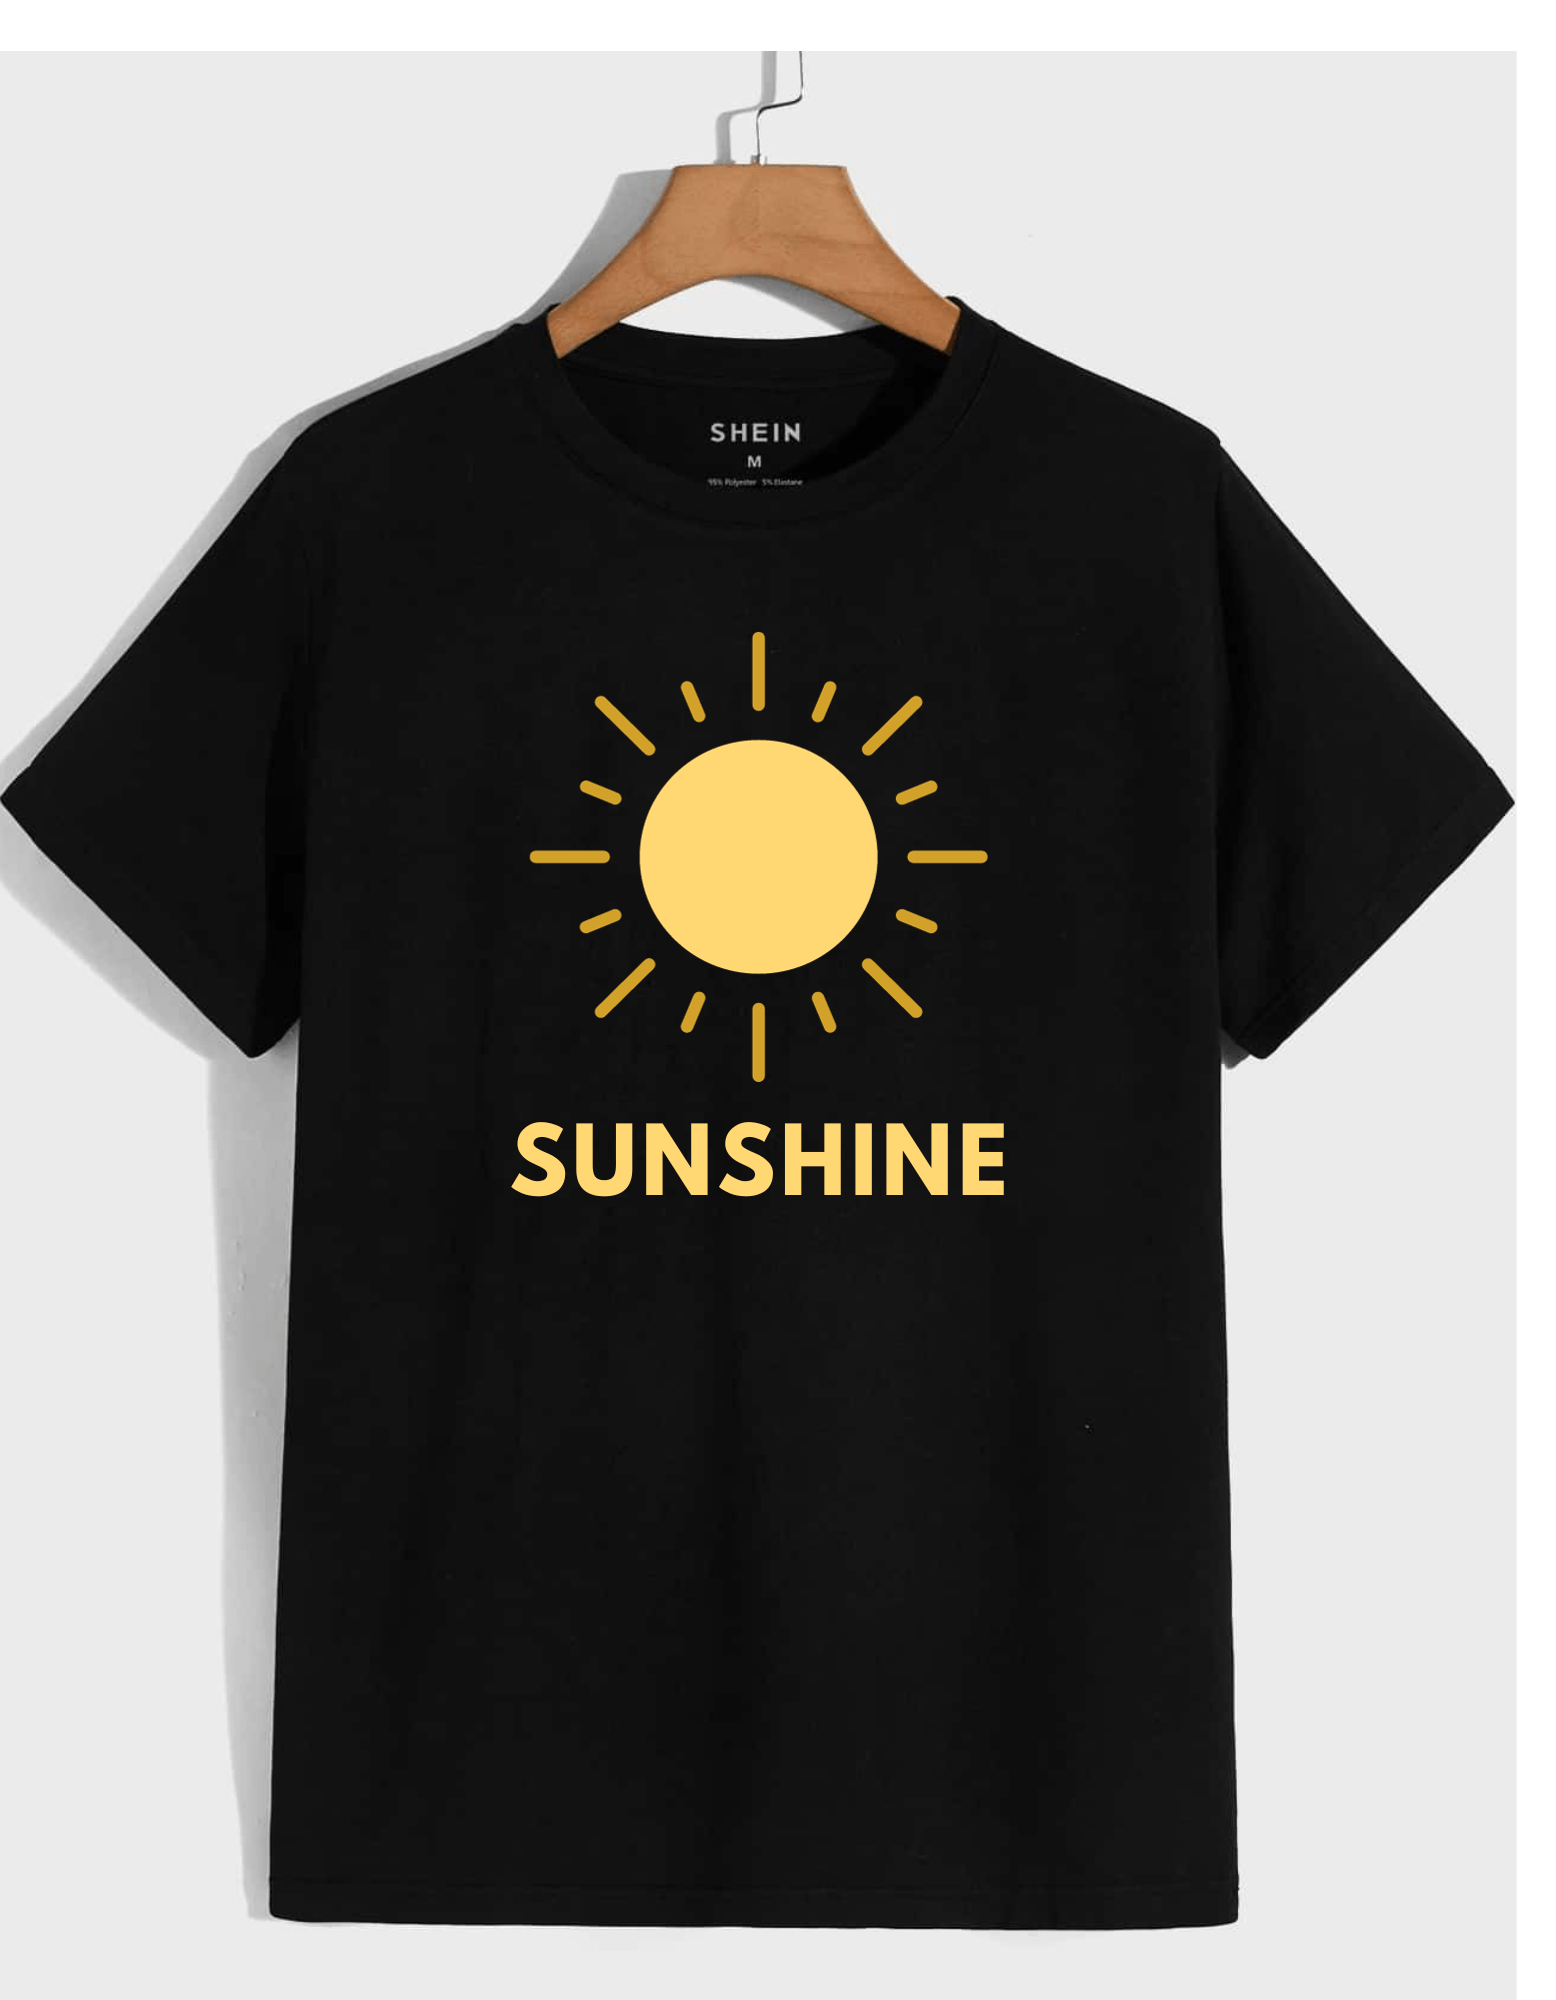 Sunshine-t shirt